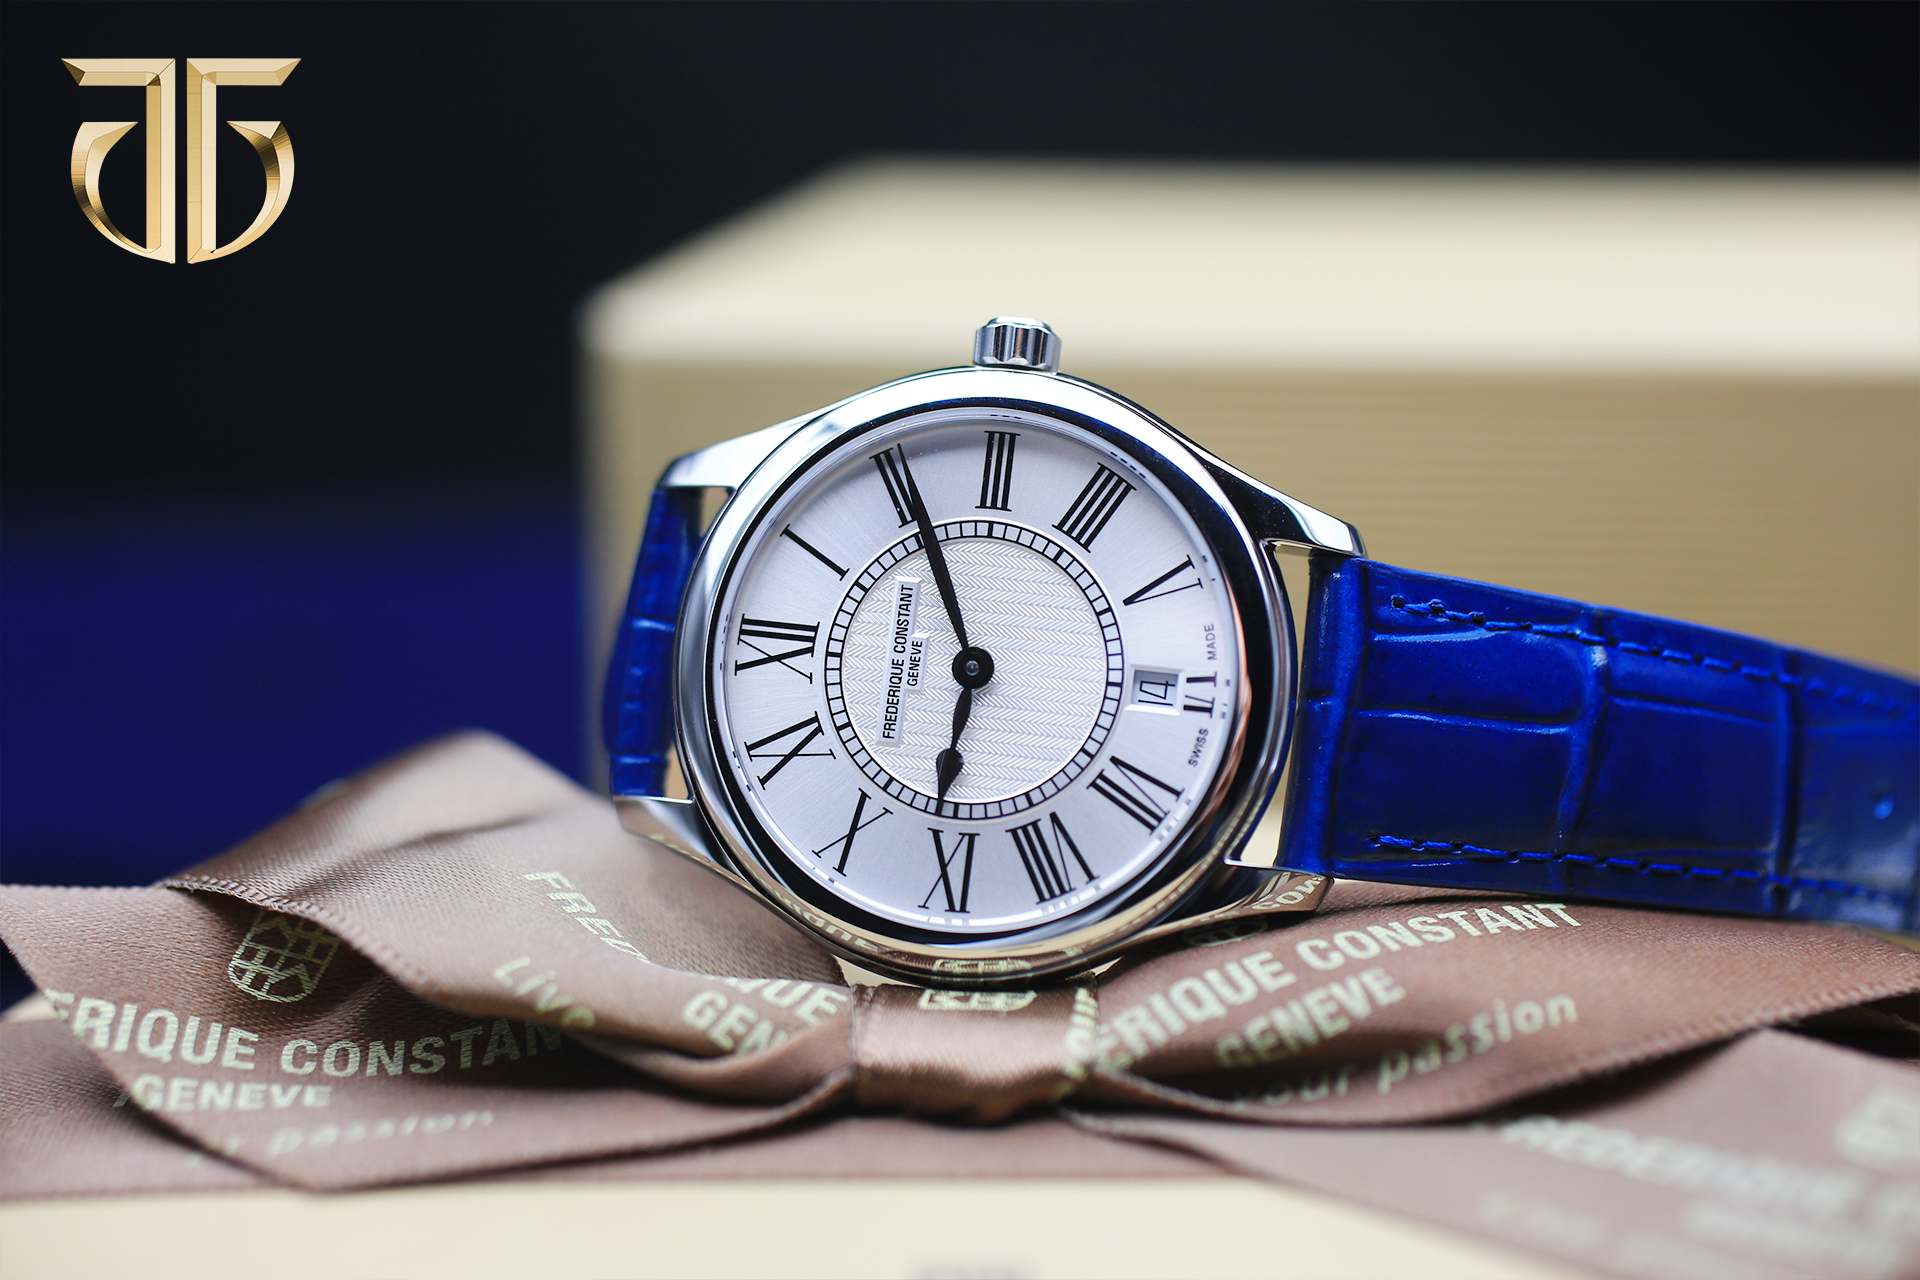 Đồng hồ Frederique Constant Geneve Chính Hãng Thụy Sĩ - HT Luxury